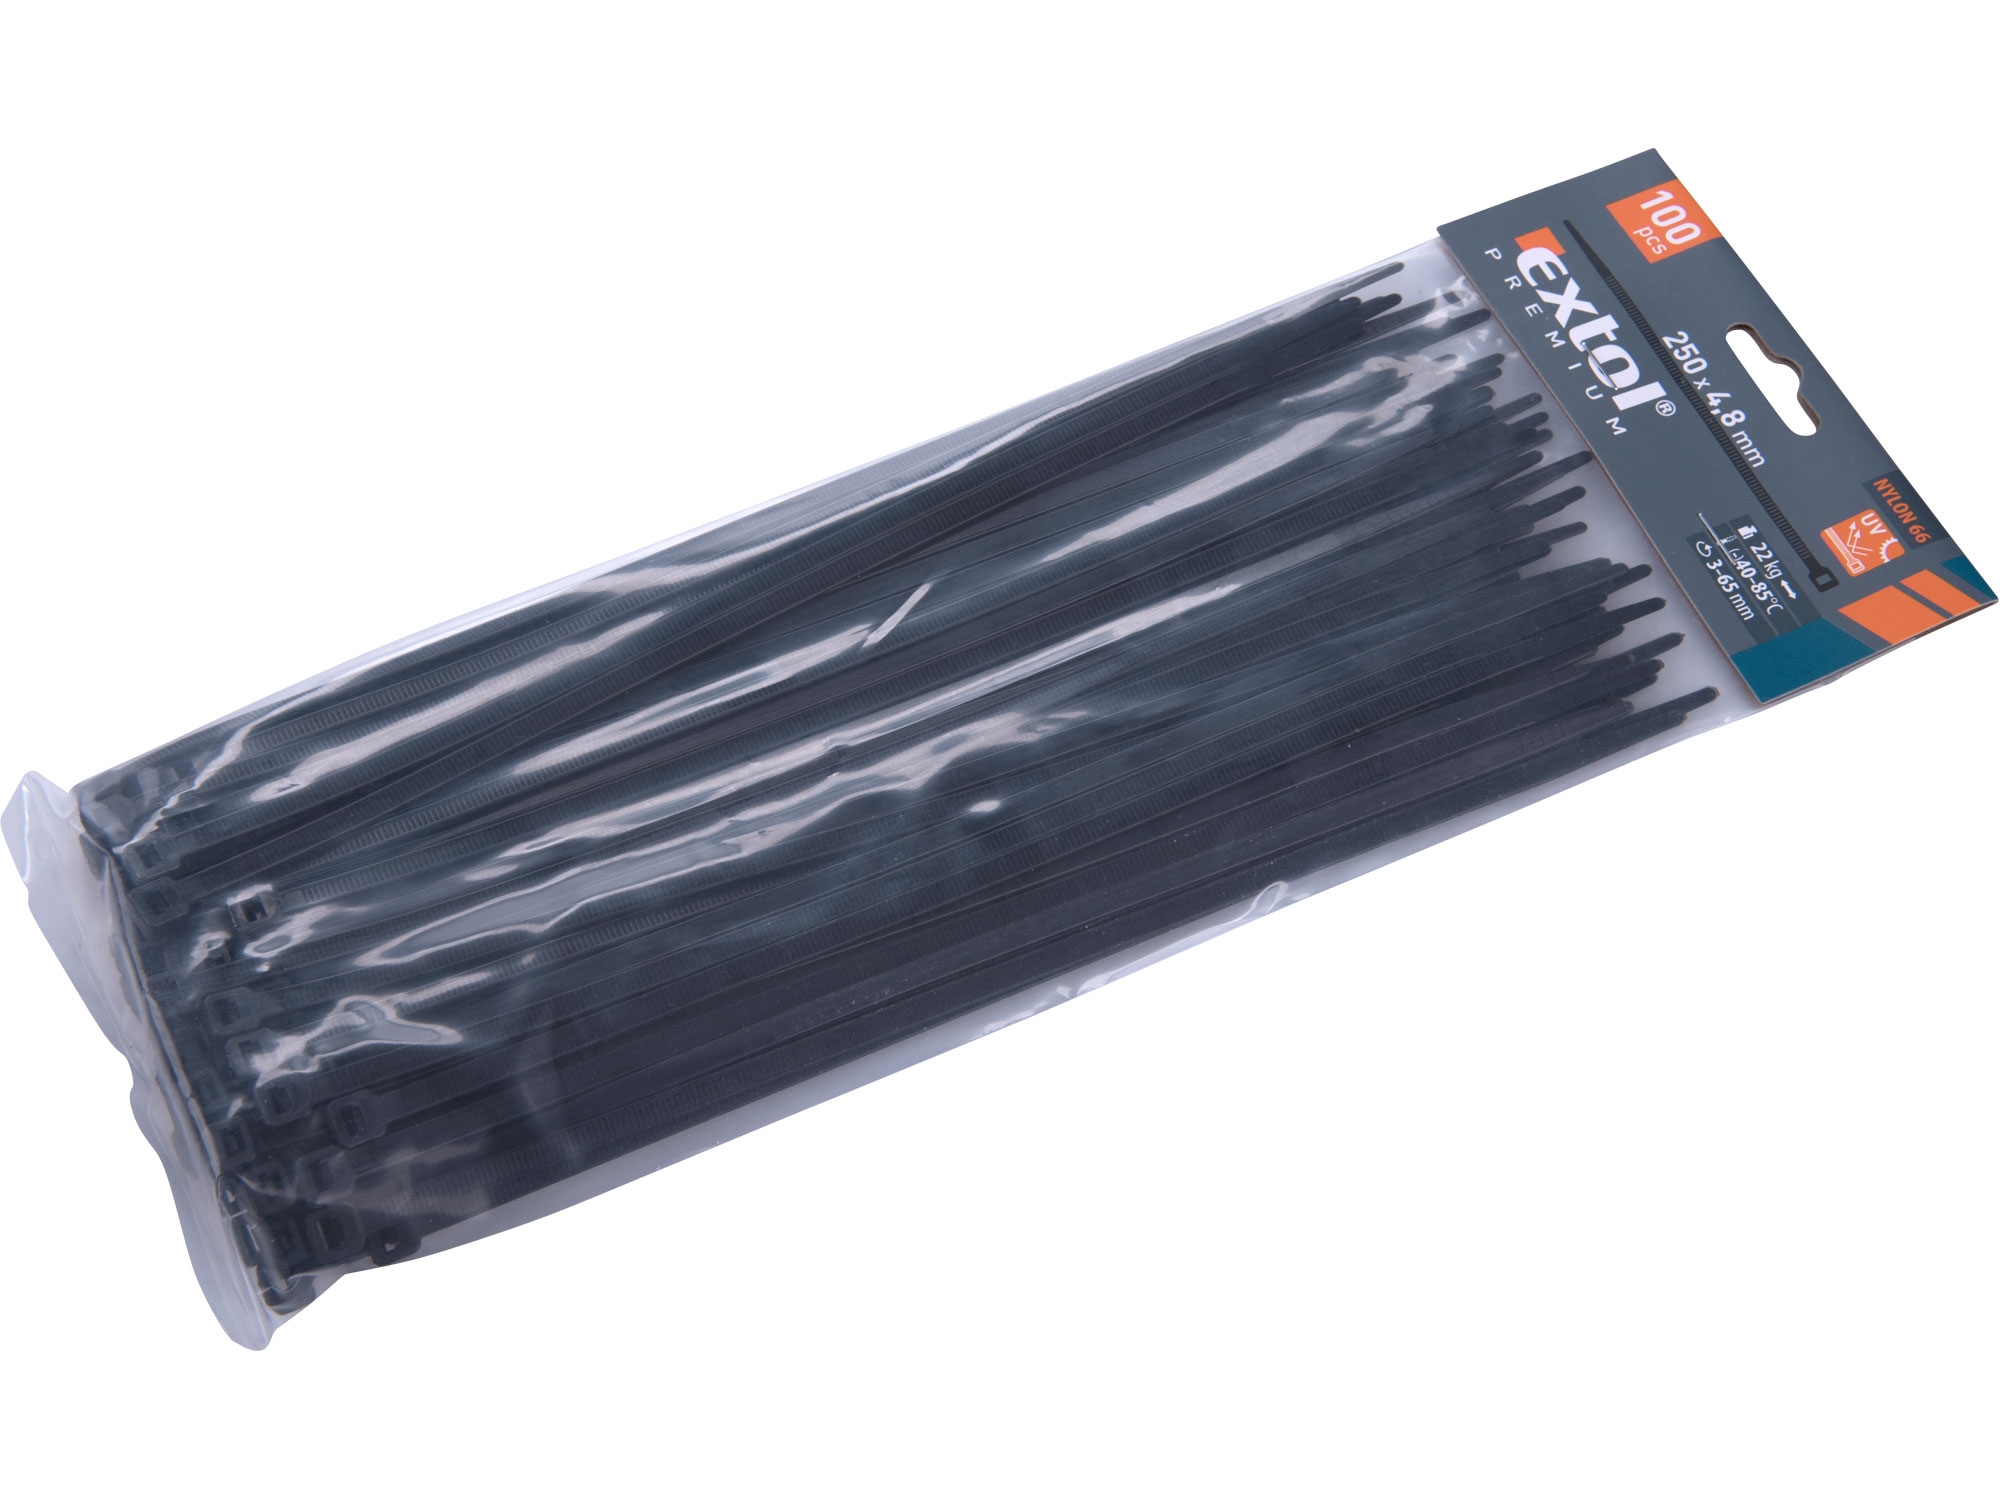 pásky stahovací černé, 250x4,8mm, 100ks, nylon, EXTOL PREMIUM 8856160